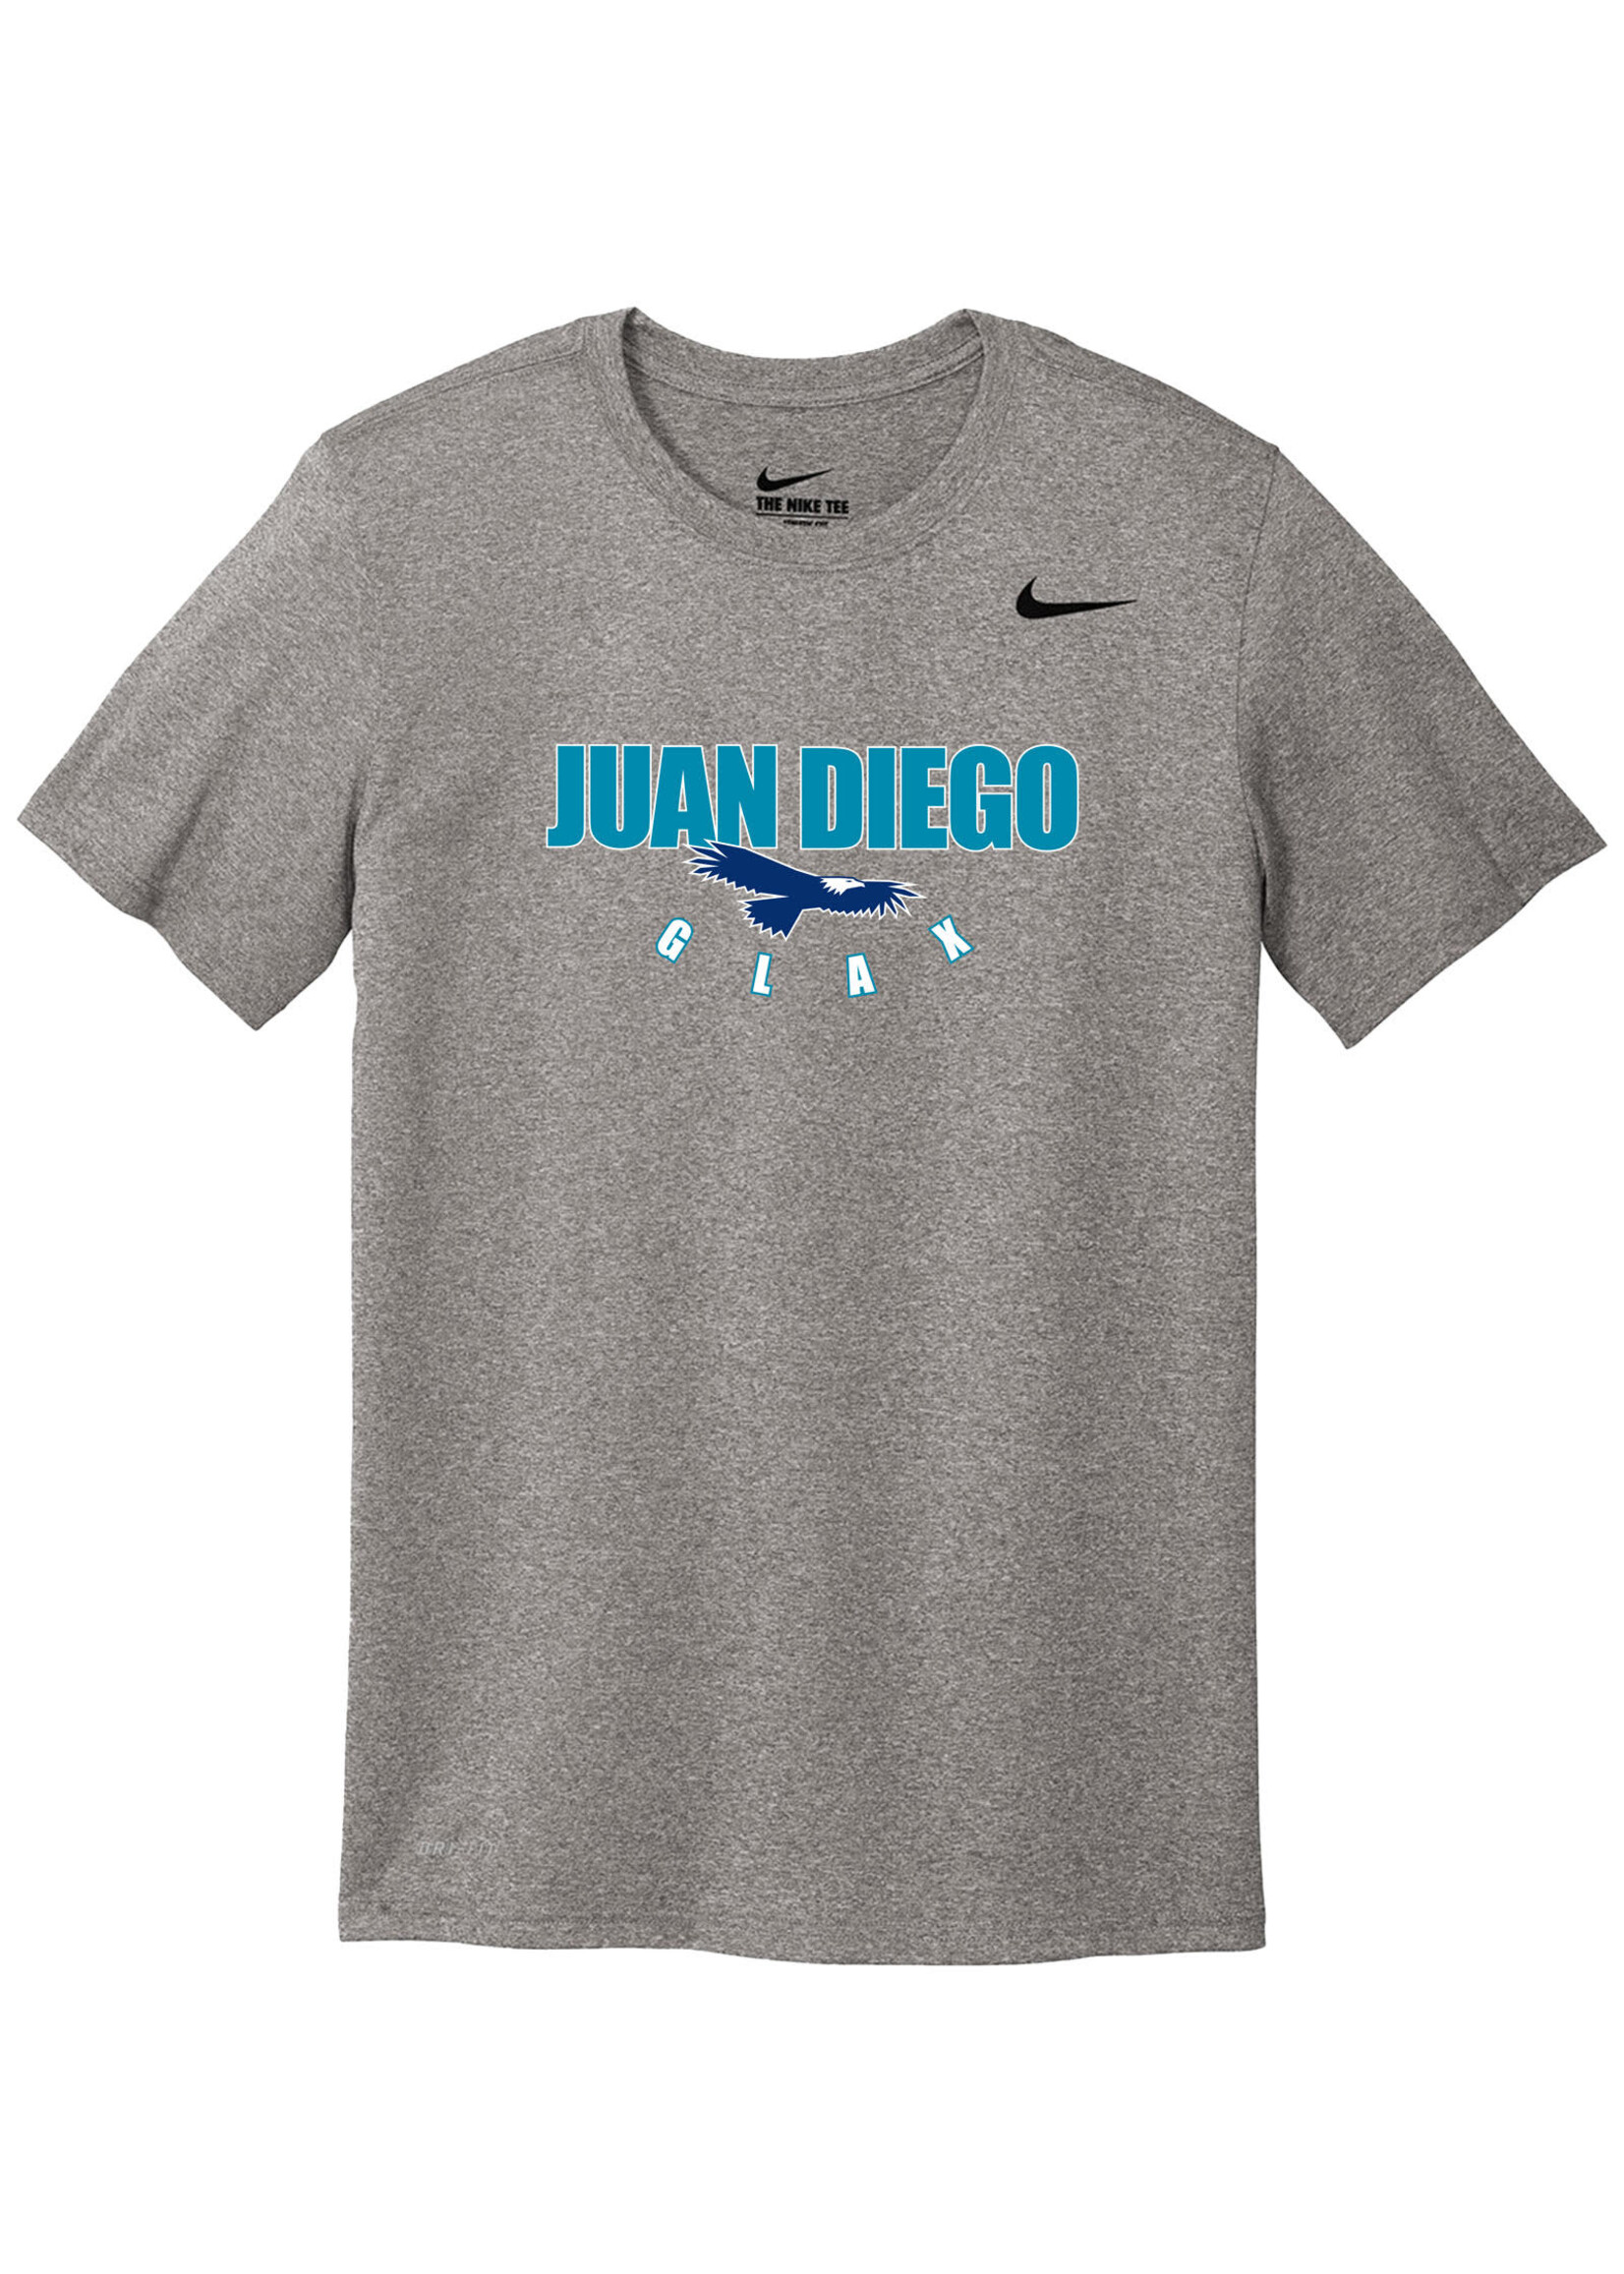 NON-UNIFORM Juan Diego GLAX - Nike Legend Short Sleeve Shirt, Unisex, Gray